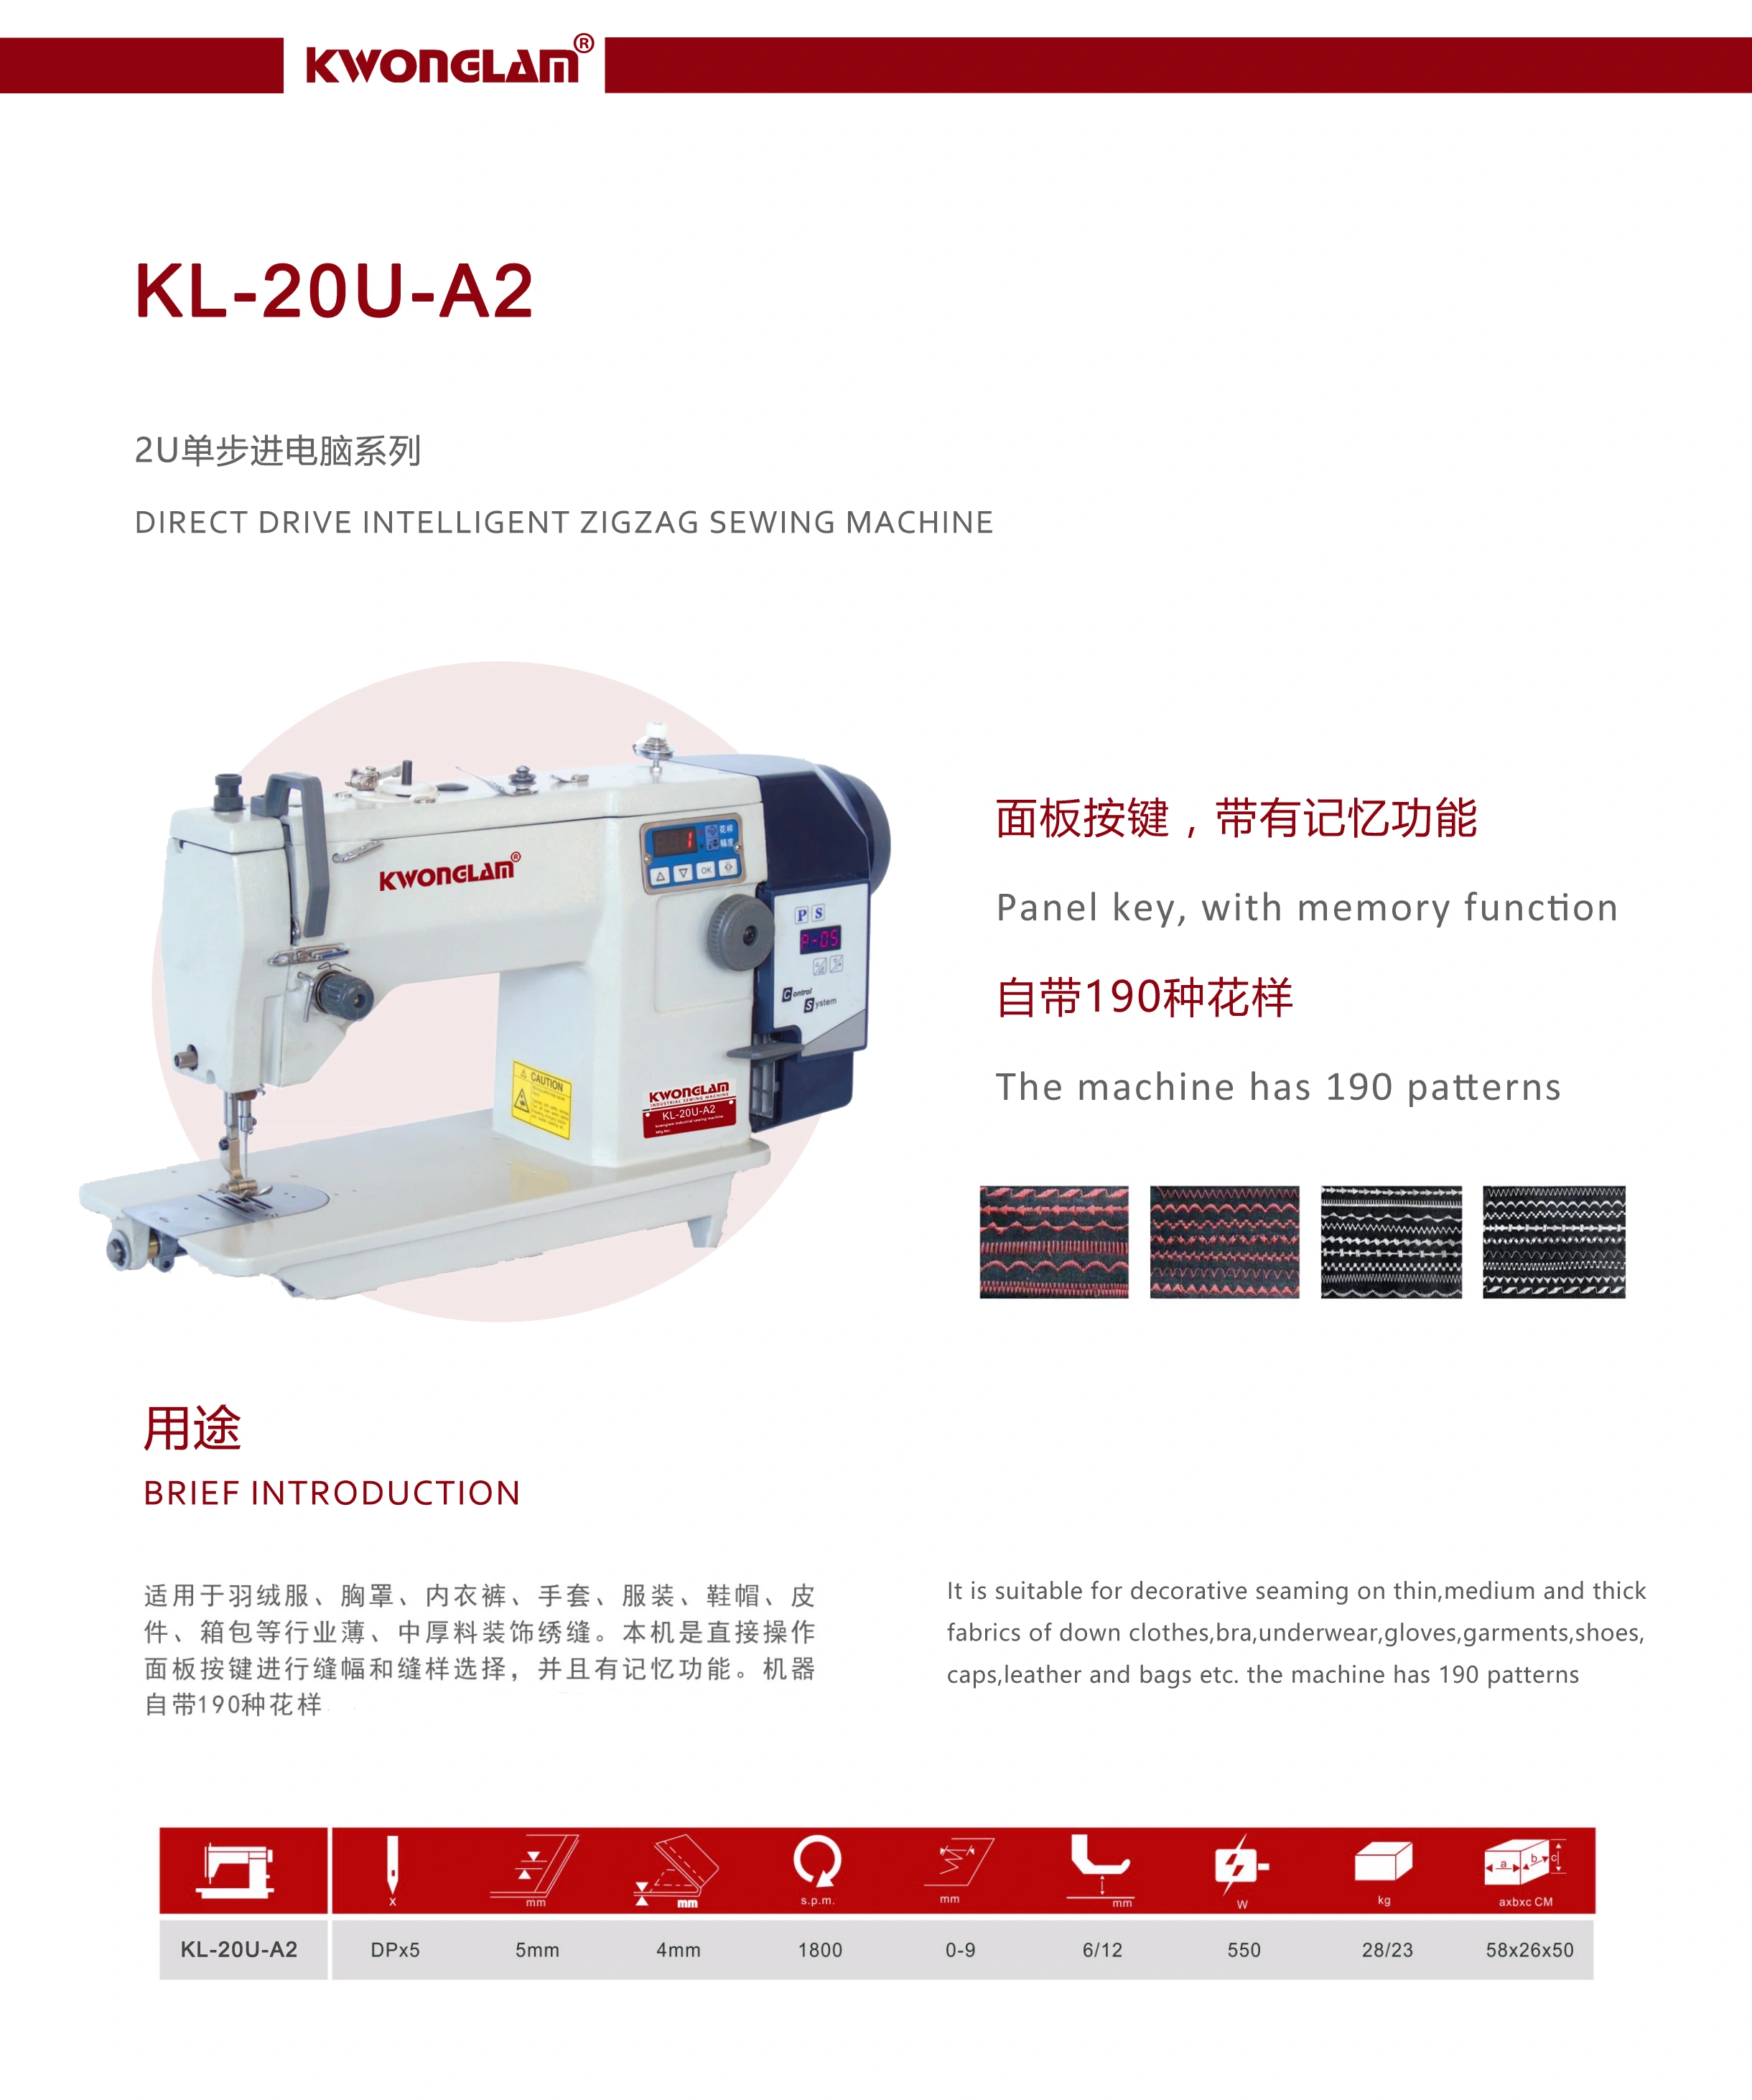 KL-20U-A2 Direct Drive Intelligent Pattern Zigzag Sewing Machine step motor